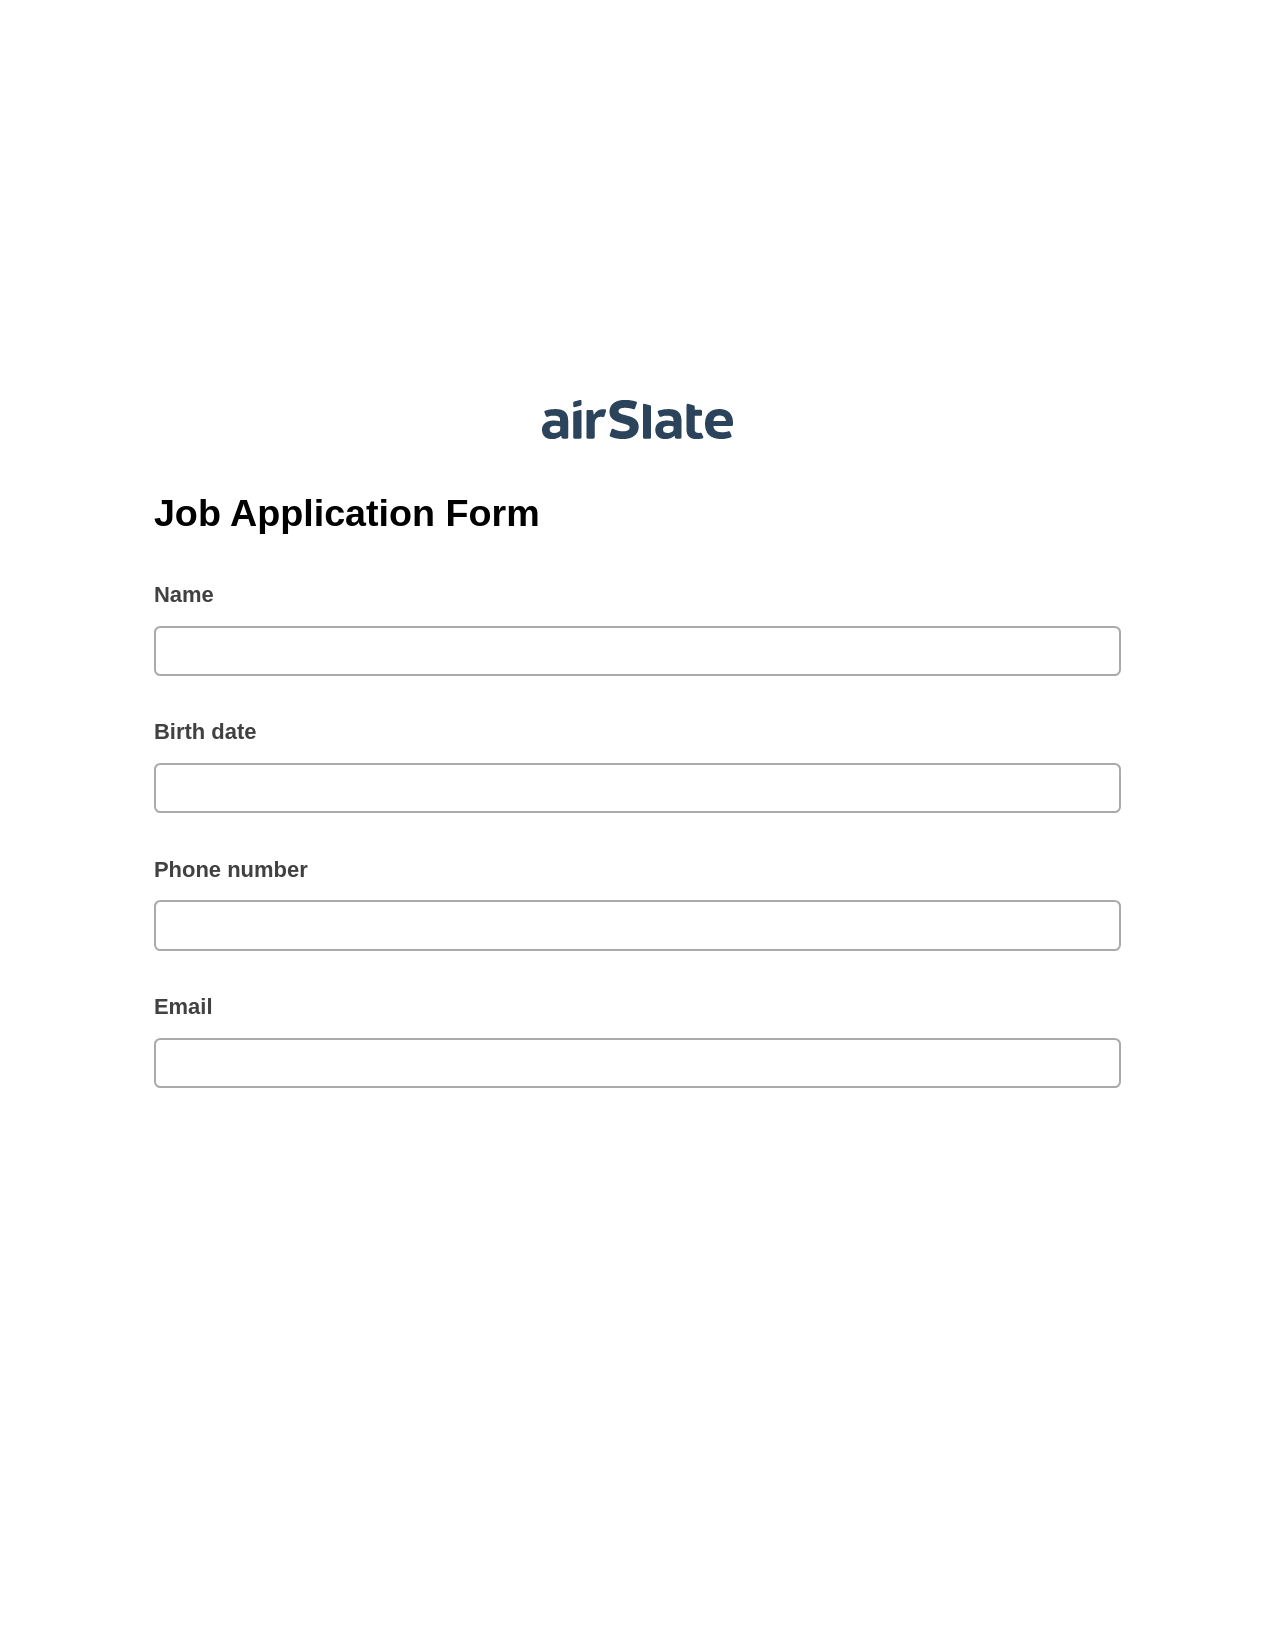 Multirole Job Application Form Pre-fill from MySQL Bot, Pre-fill with Custom Data Bot, Post-finish Document Bot